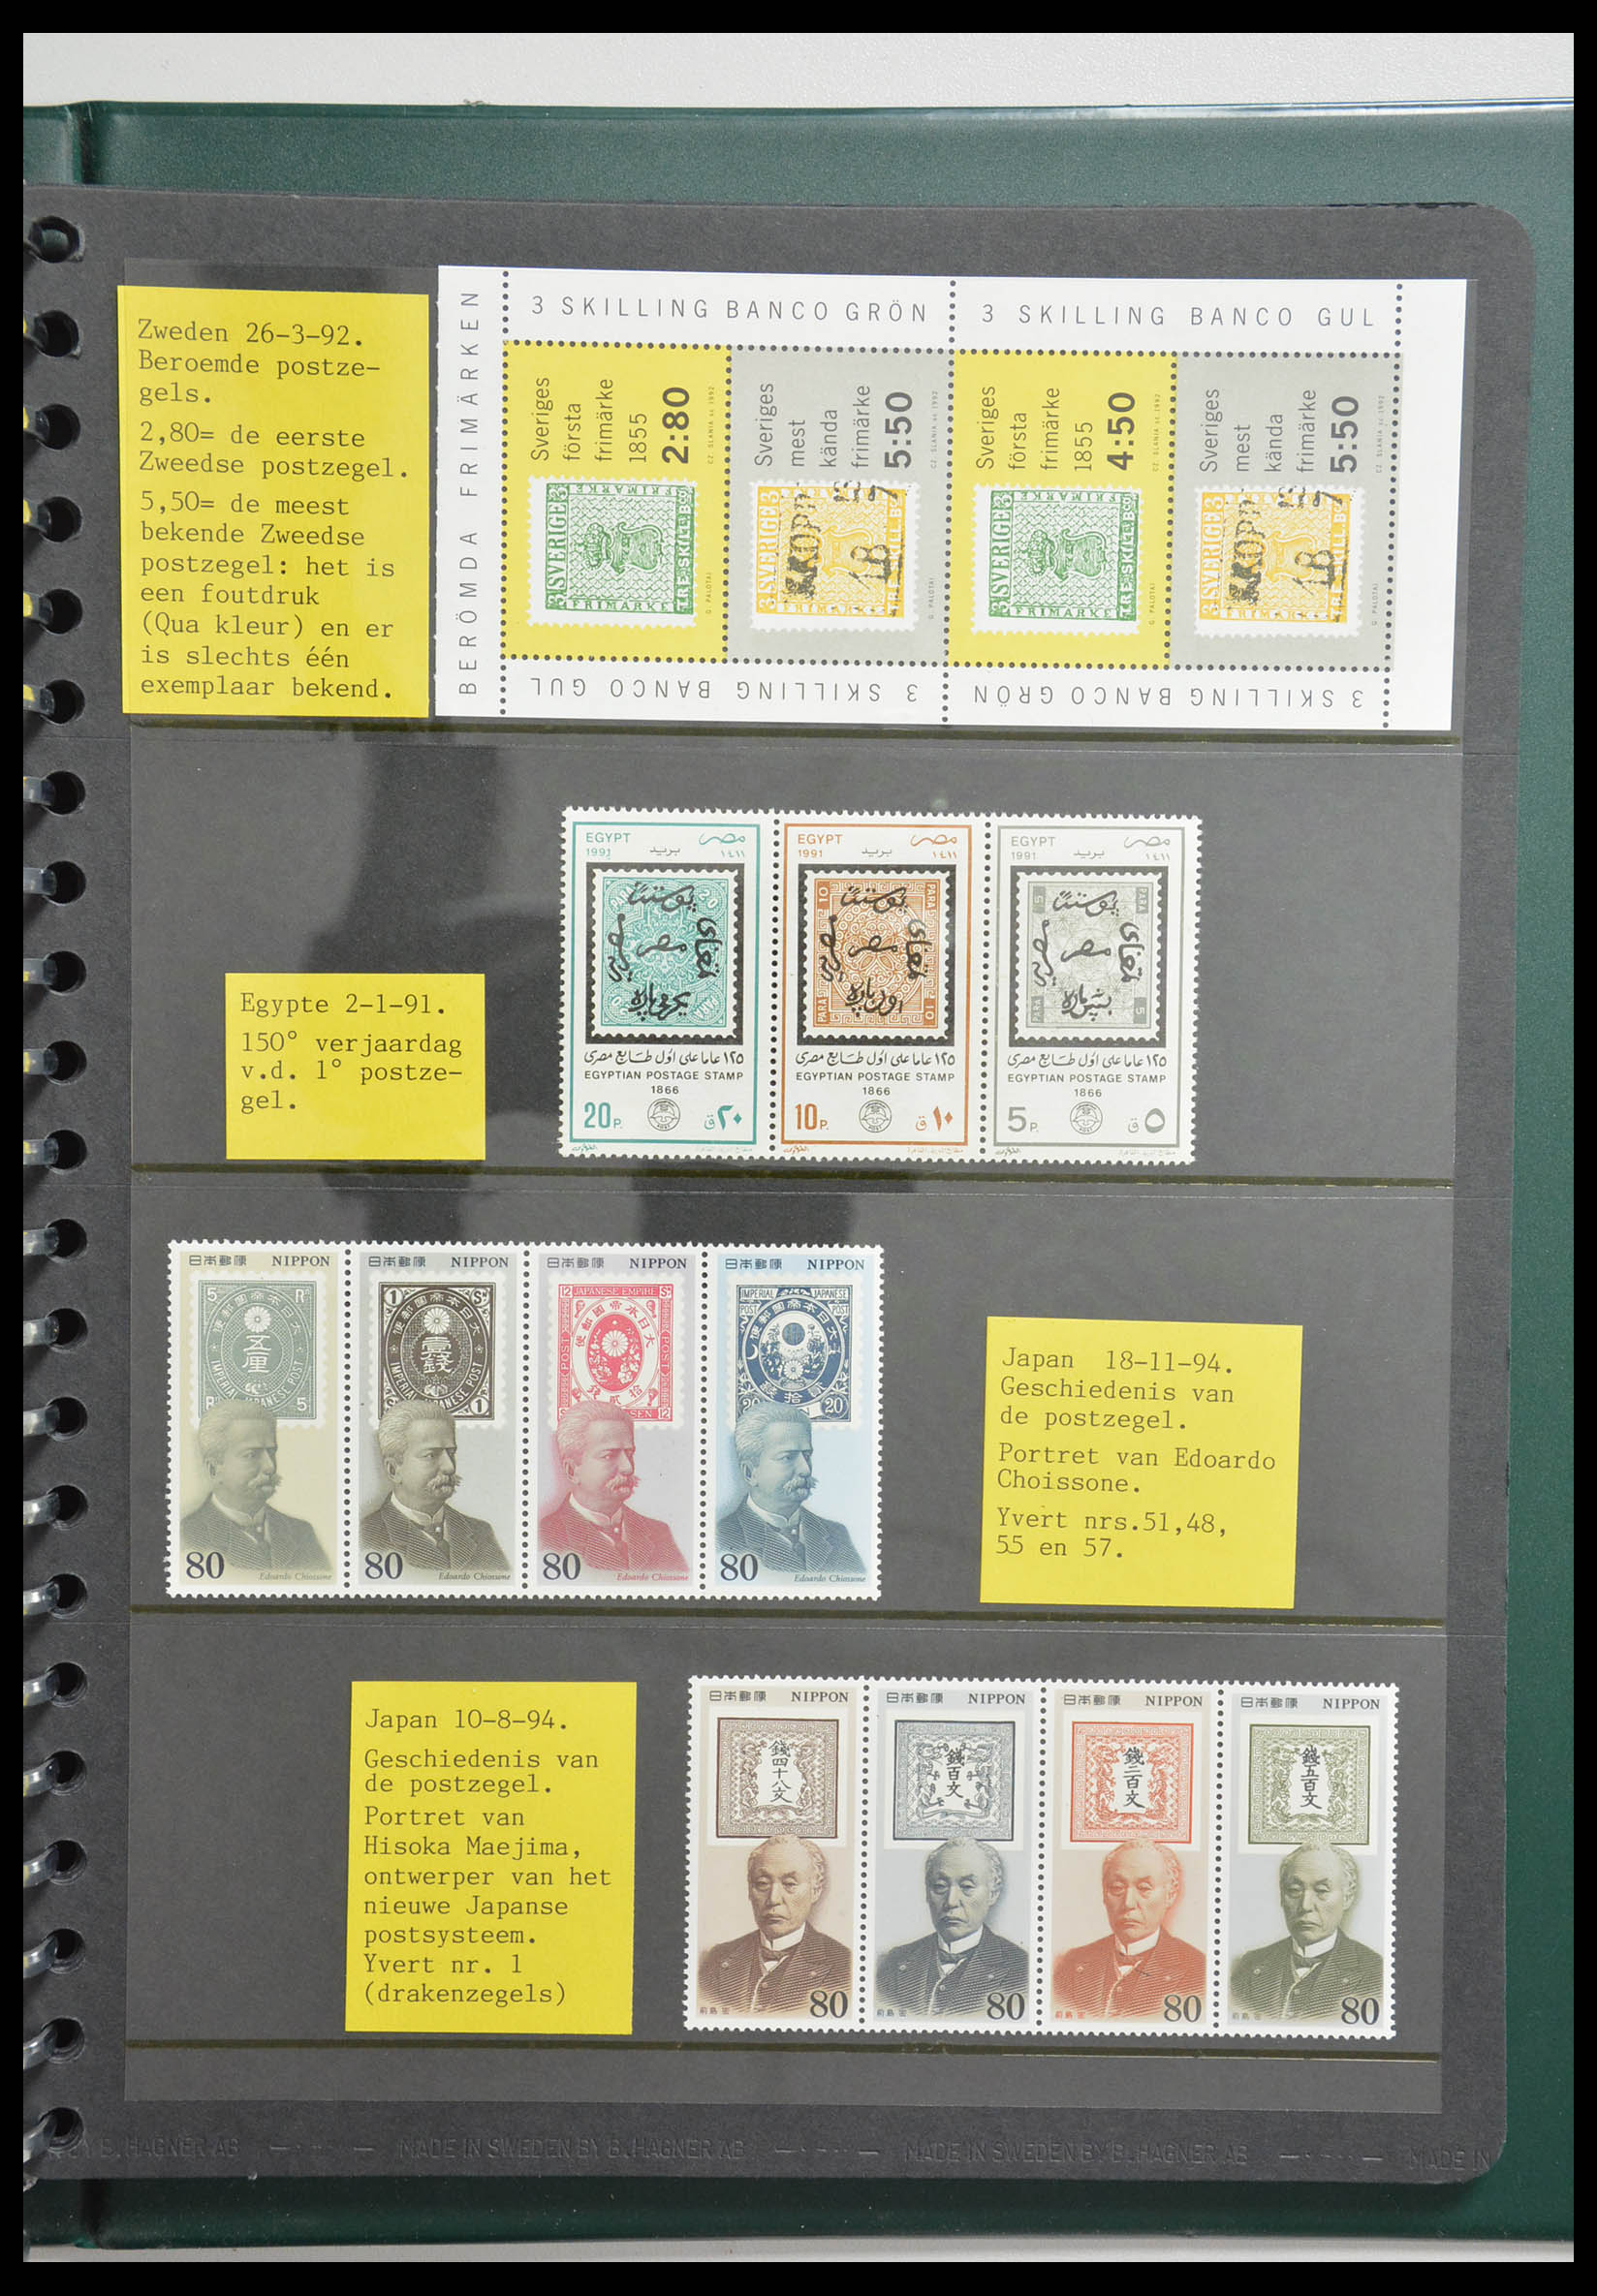 28337 126 - 28337 Postzegel op postzegel 1840-2001.